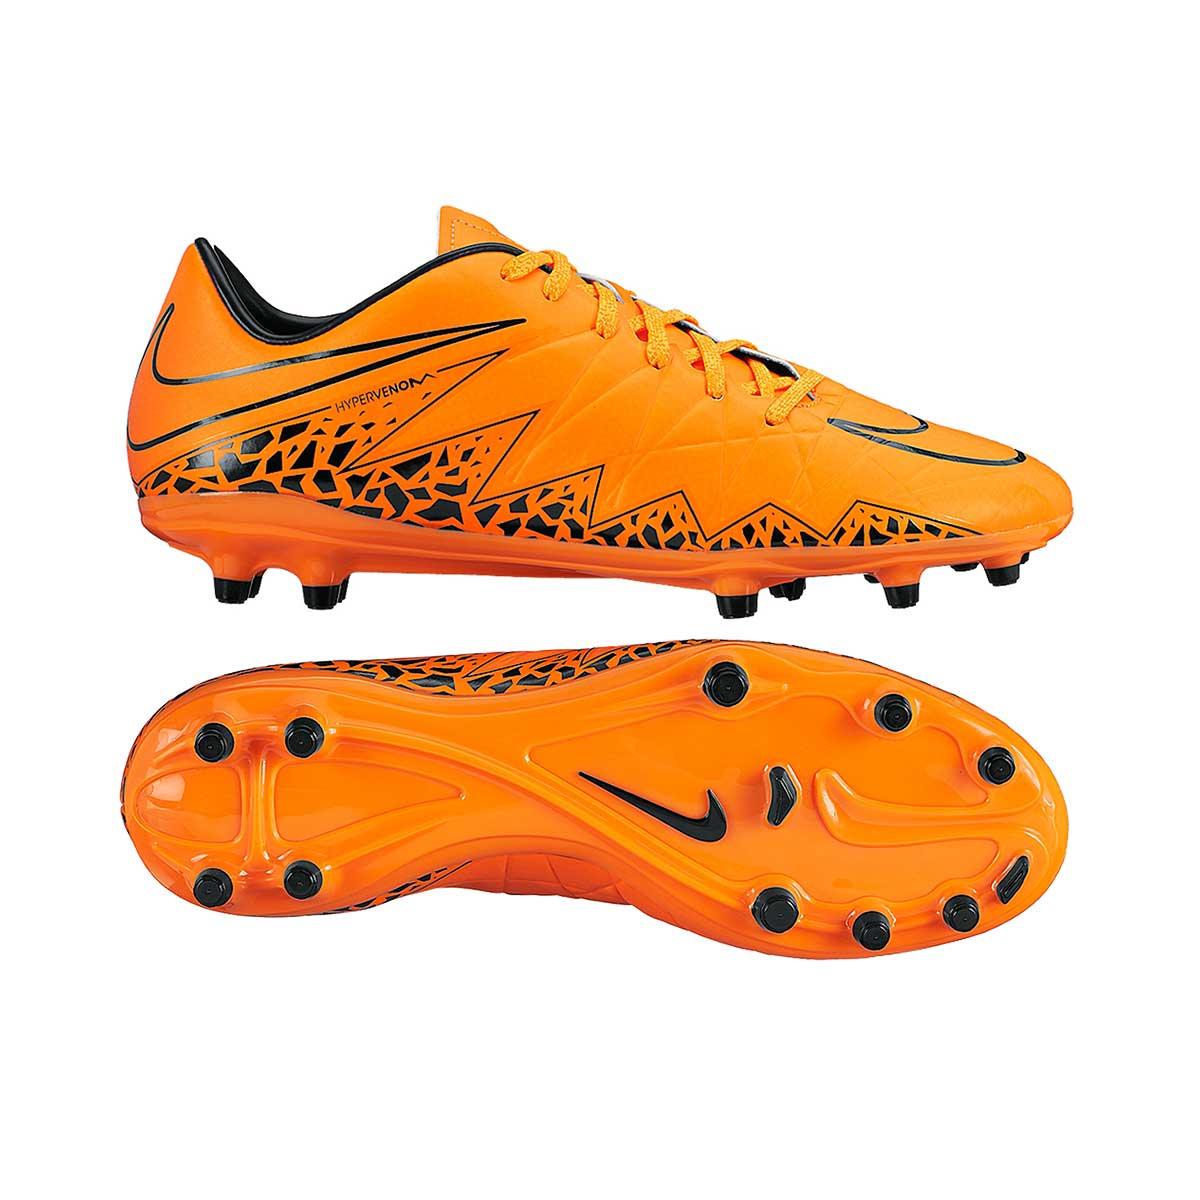 Nike Hypervenom Phelon II FG Football Shoes Online India